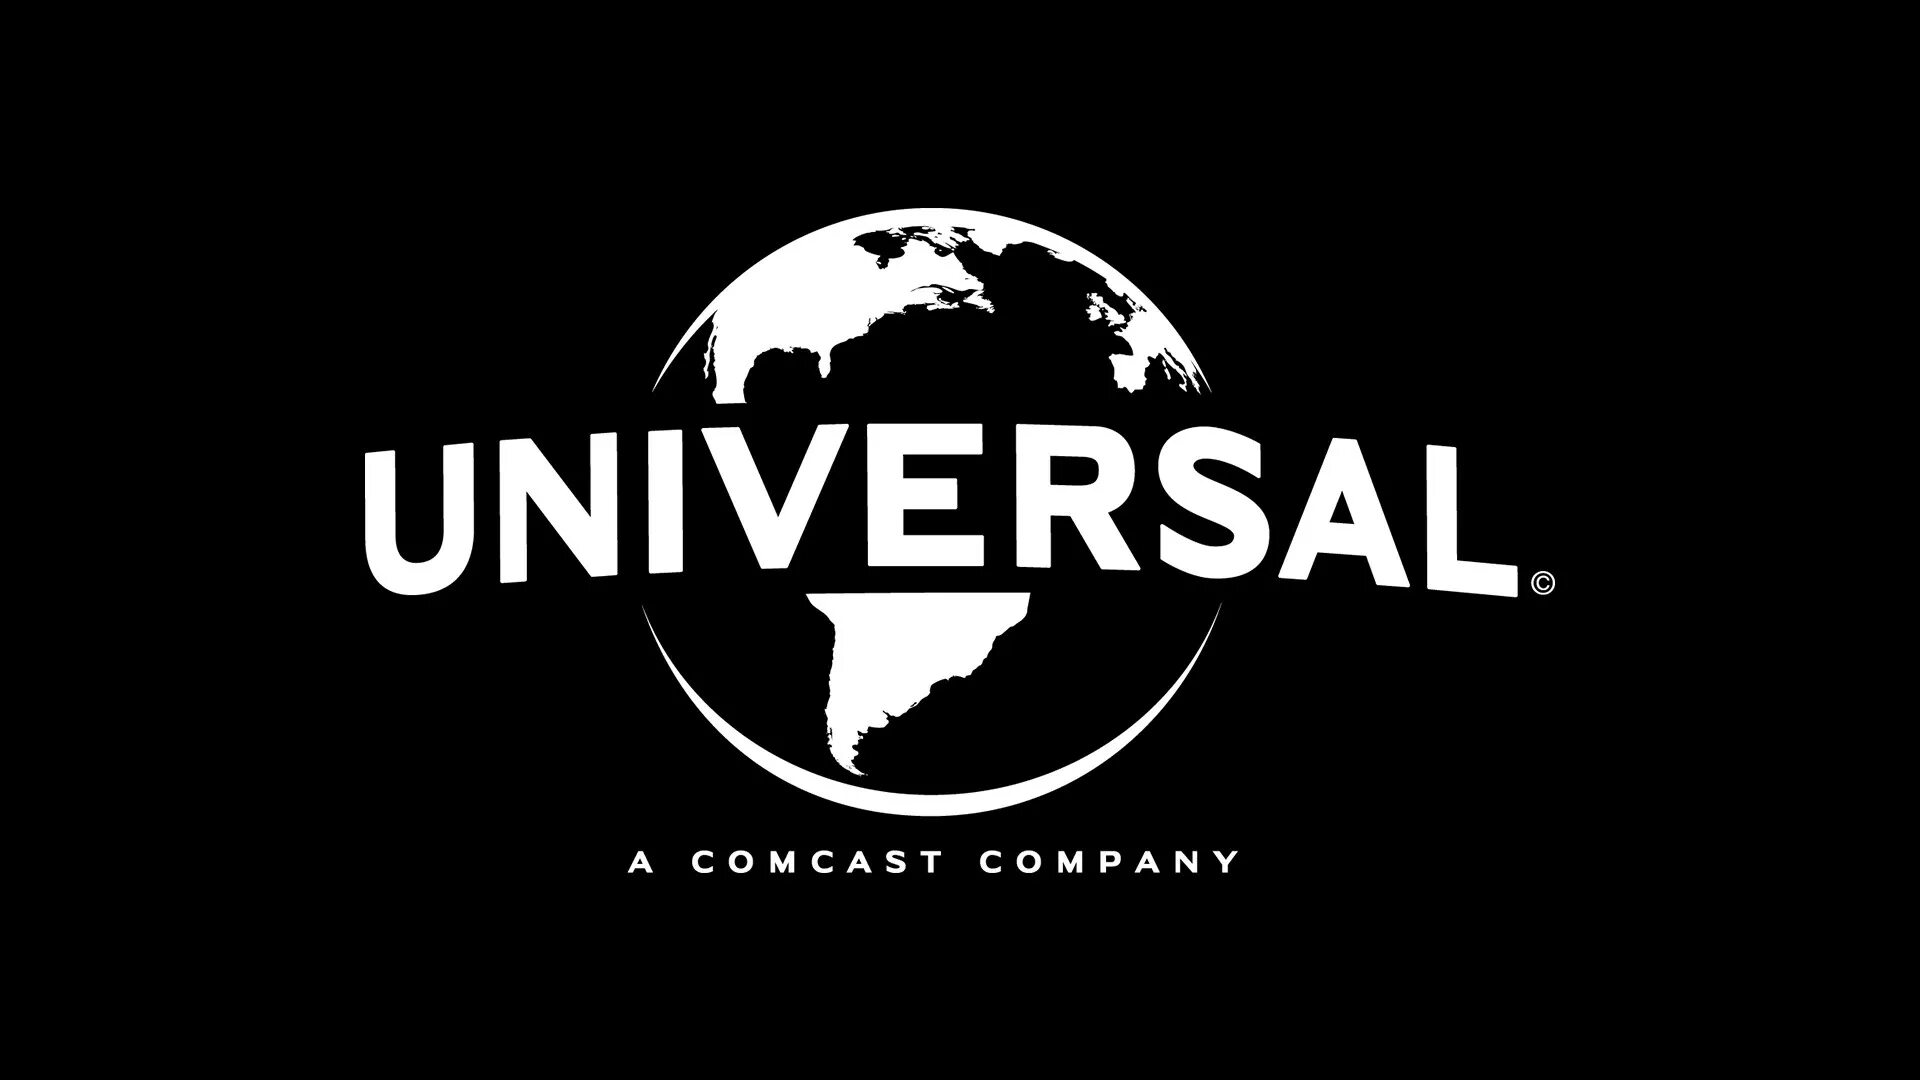 Юниверсал киностудия логотип. Кинокомпания Universal pictures. Логотип компании Юниверсал пикчерс. Юнивёрсал пикчерс логотип 1912. Кинокомпания пикчерз